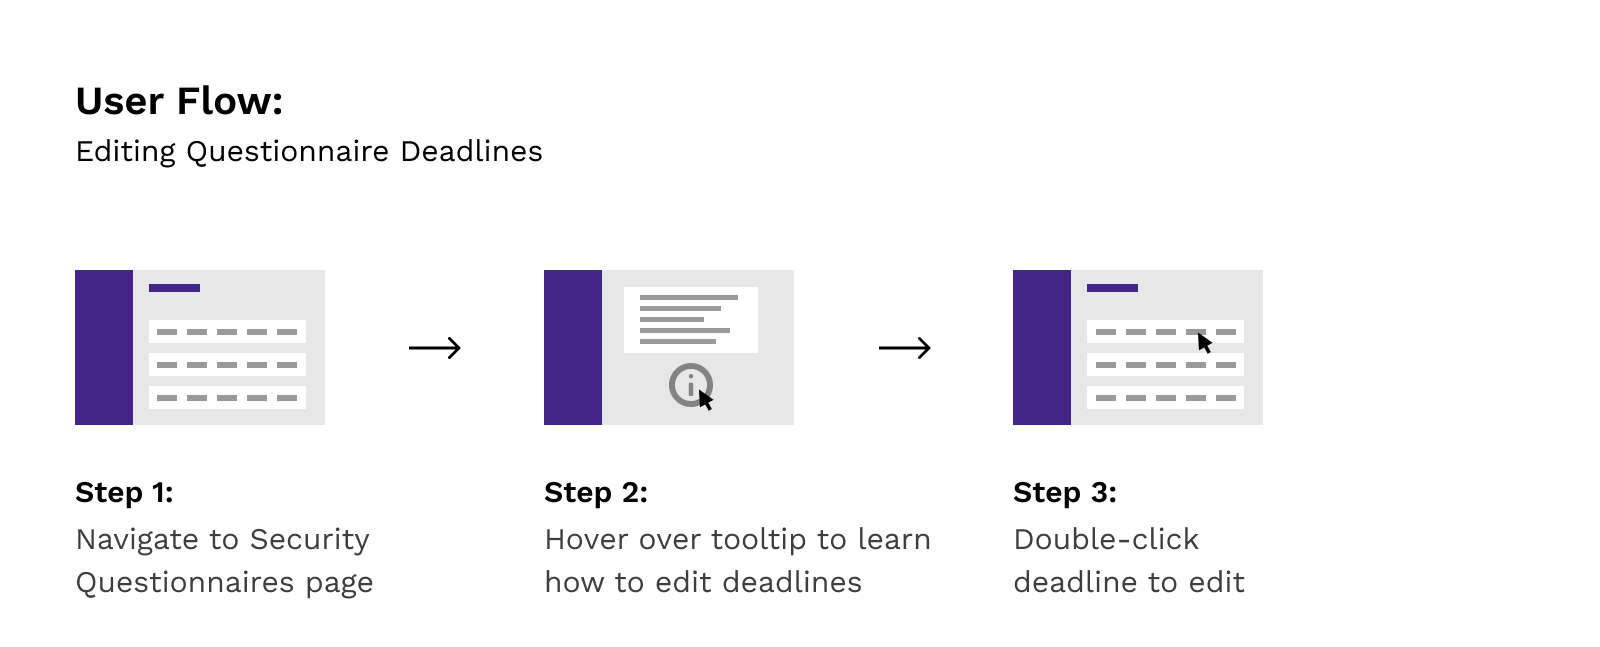 User Flow - Editing Questionnaire Deadlines